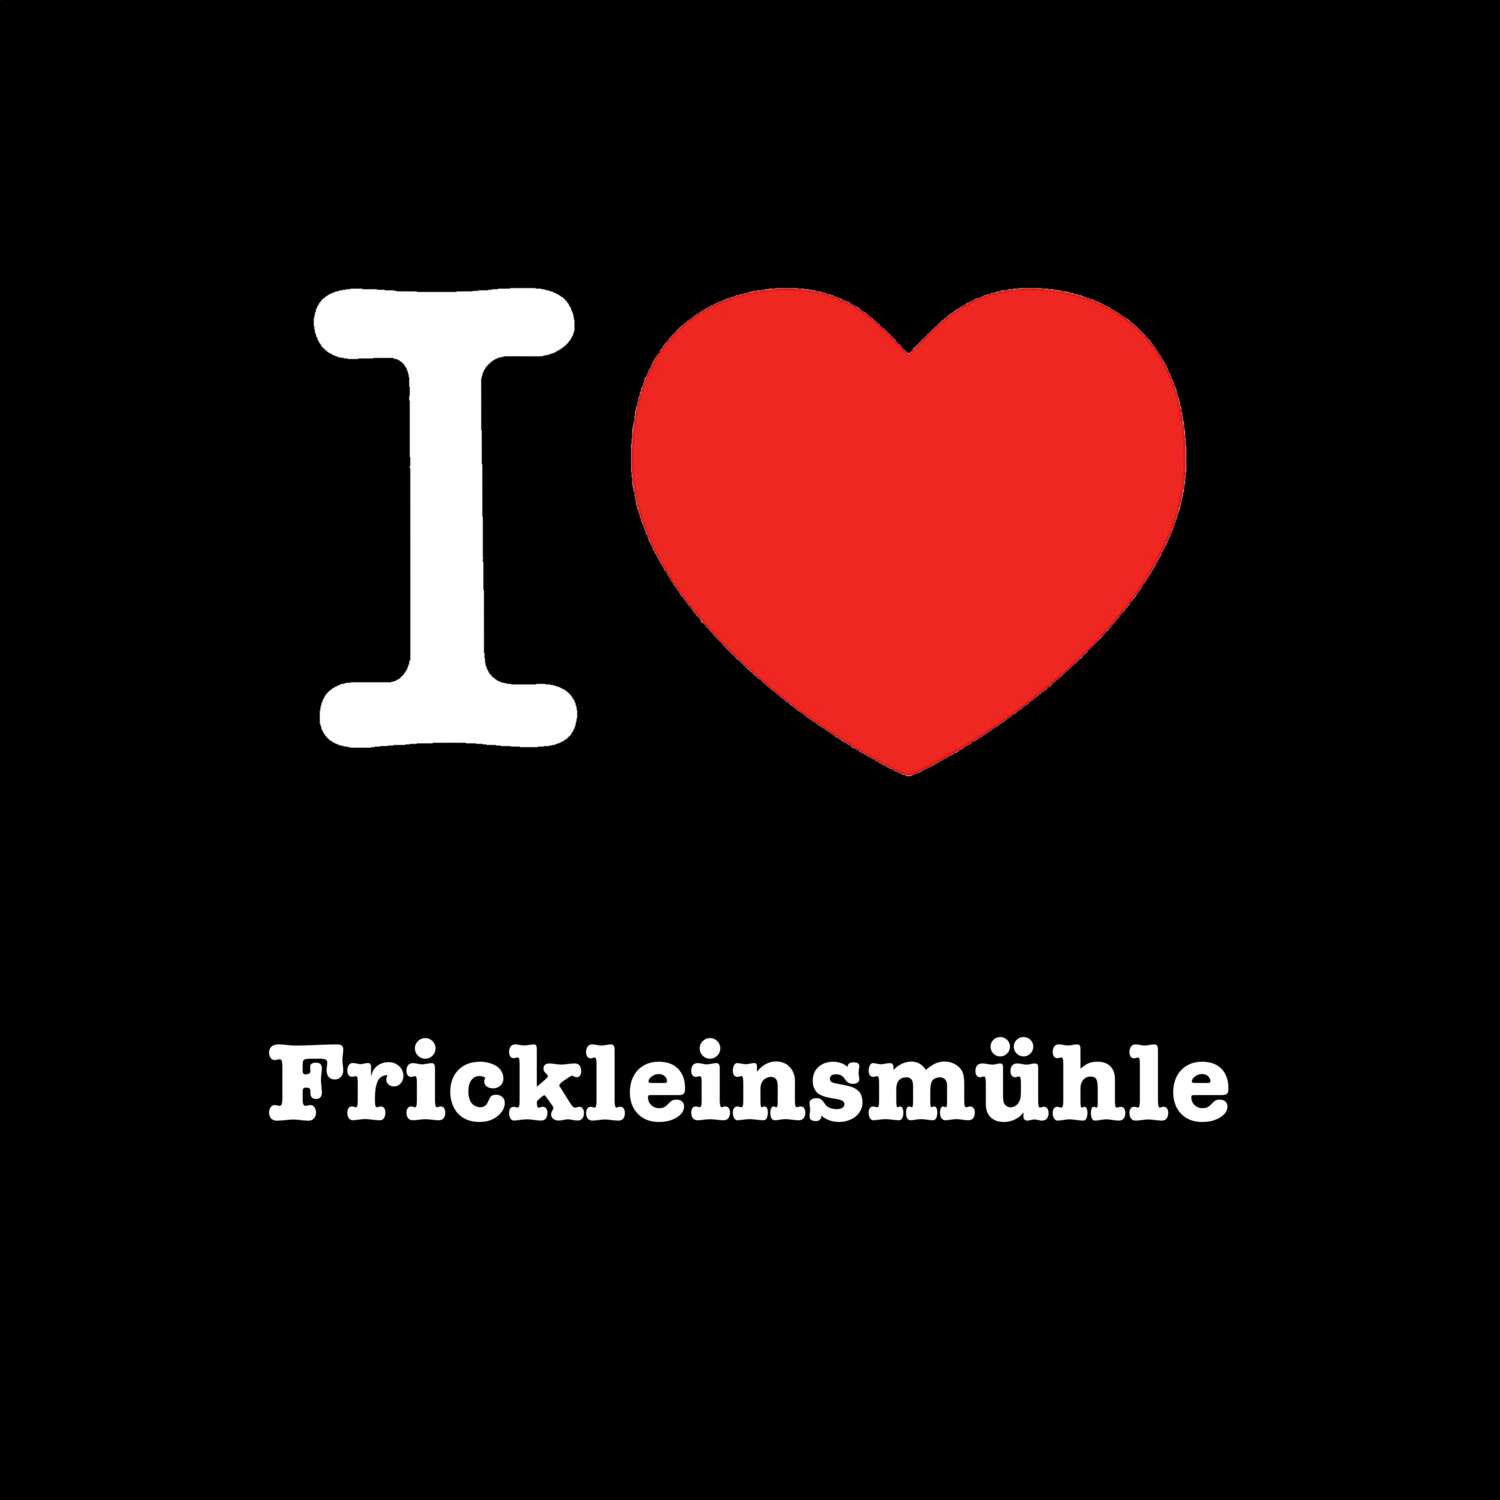 Frickleinsmühle T-Shirt »I love«